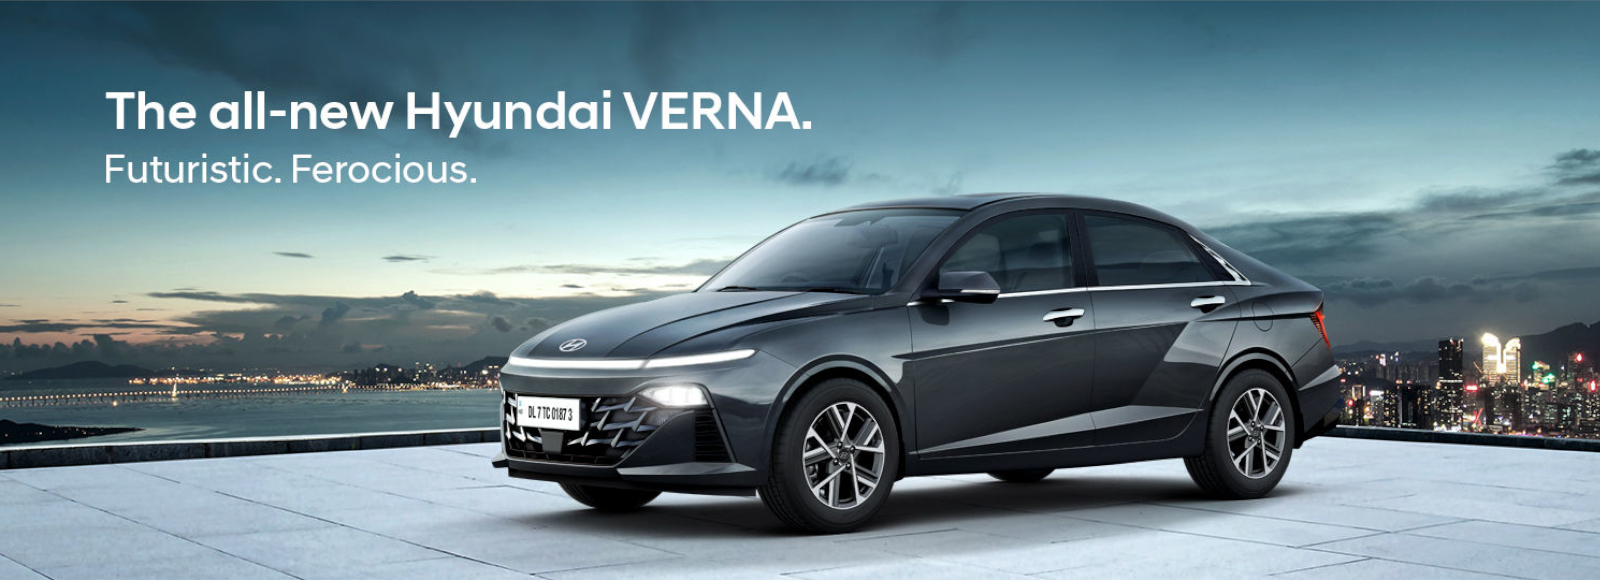 Popular Hyundai - New VERNA